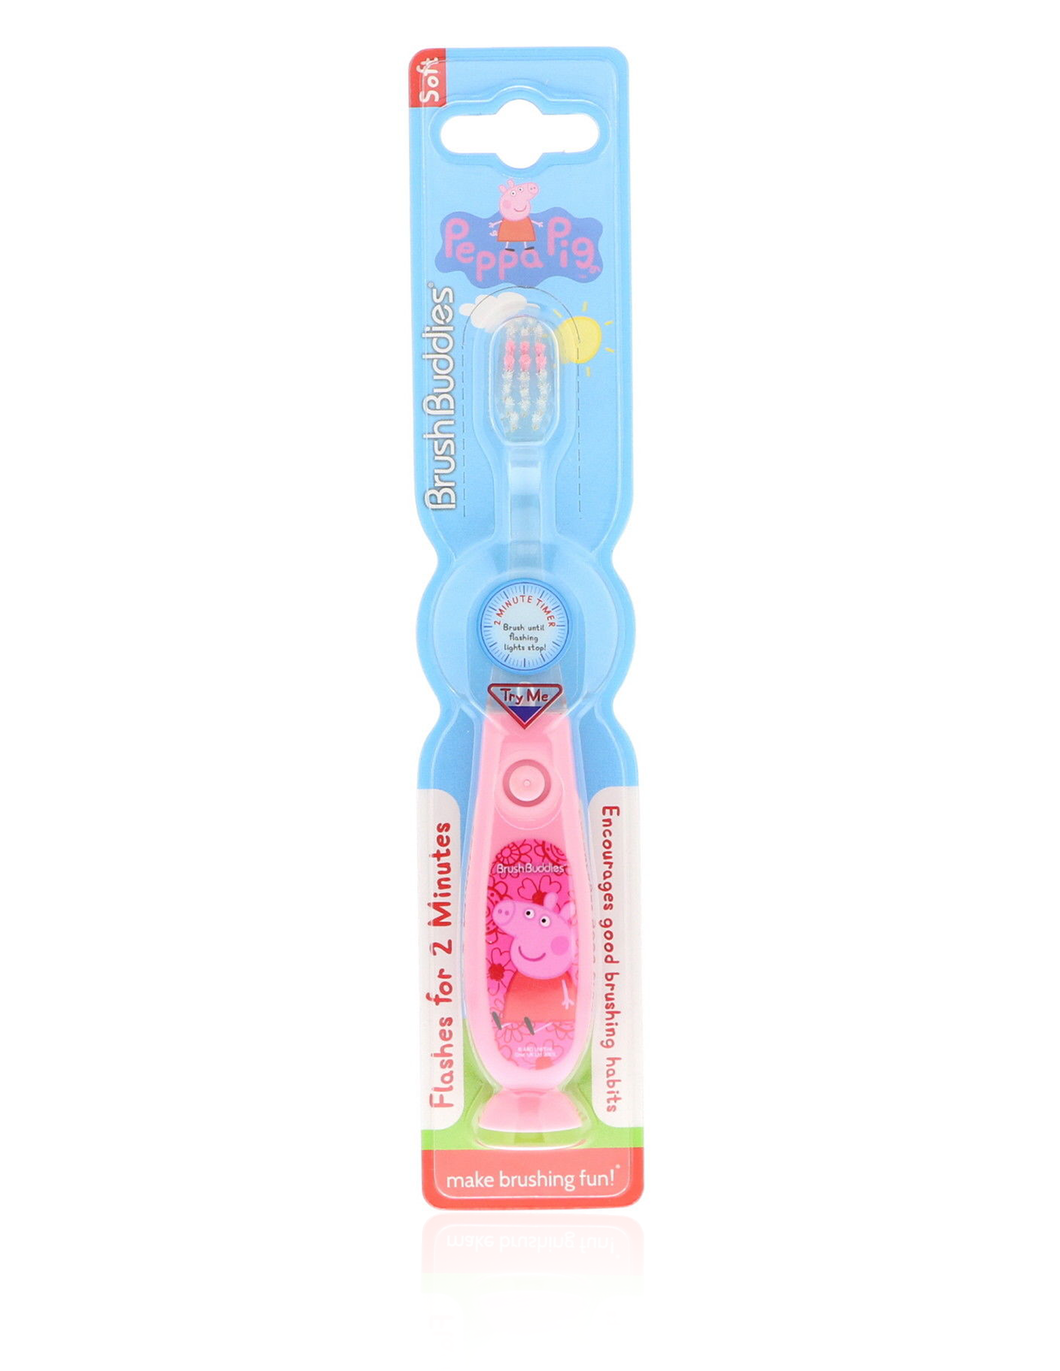 Peppa Pig Flash Toothbrush